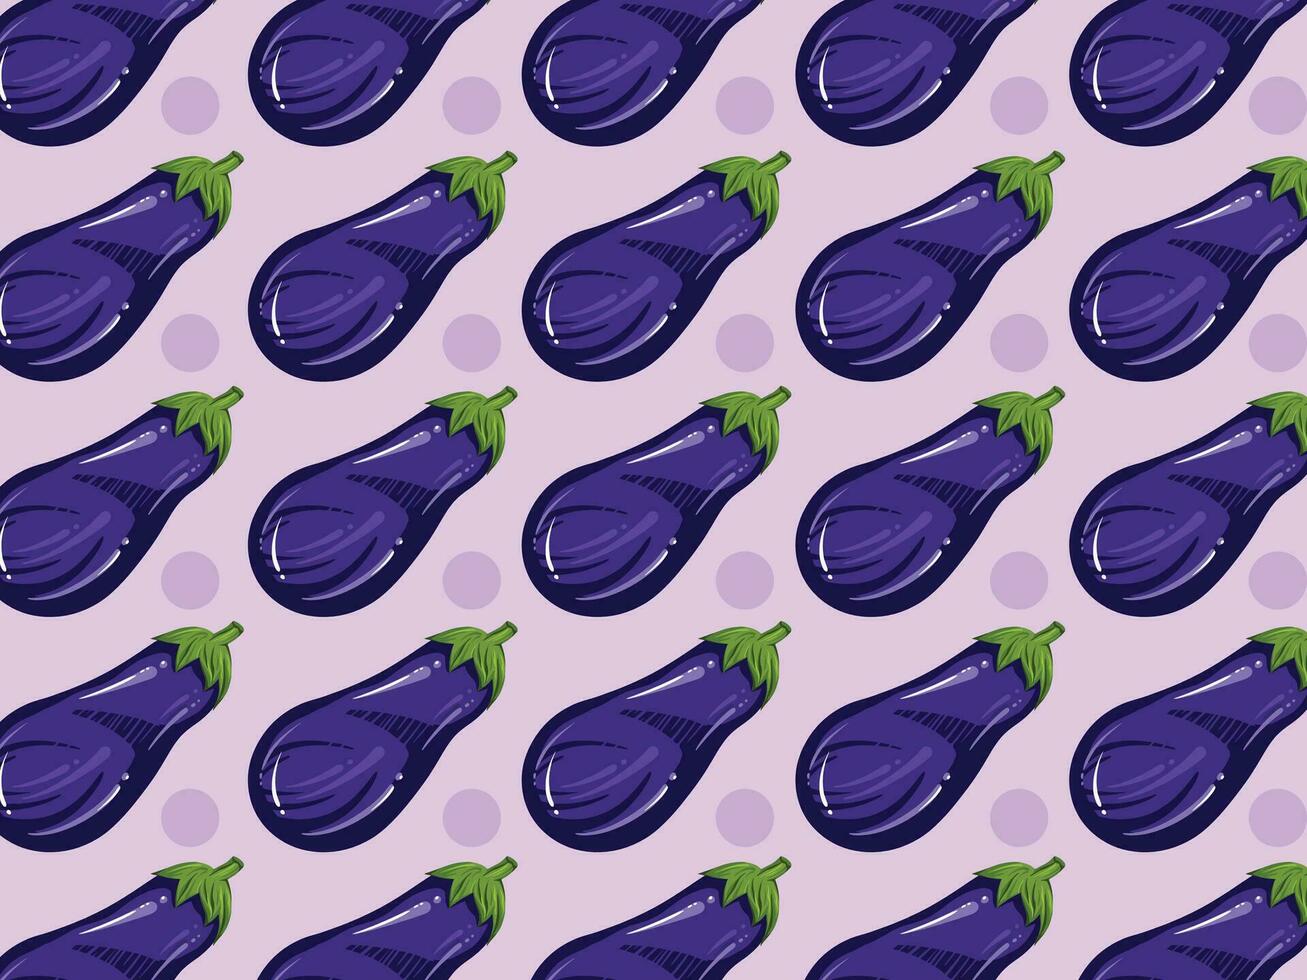 Eggplants purple vegetable pattern vector illustration isolated on purple colored horizontal background.